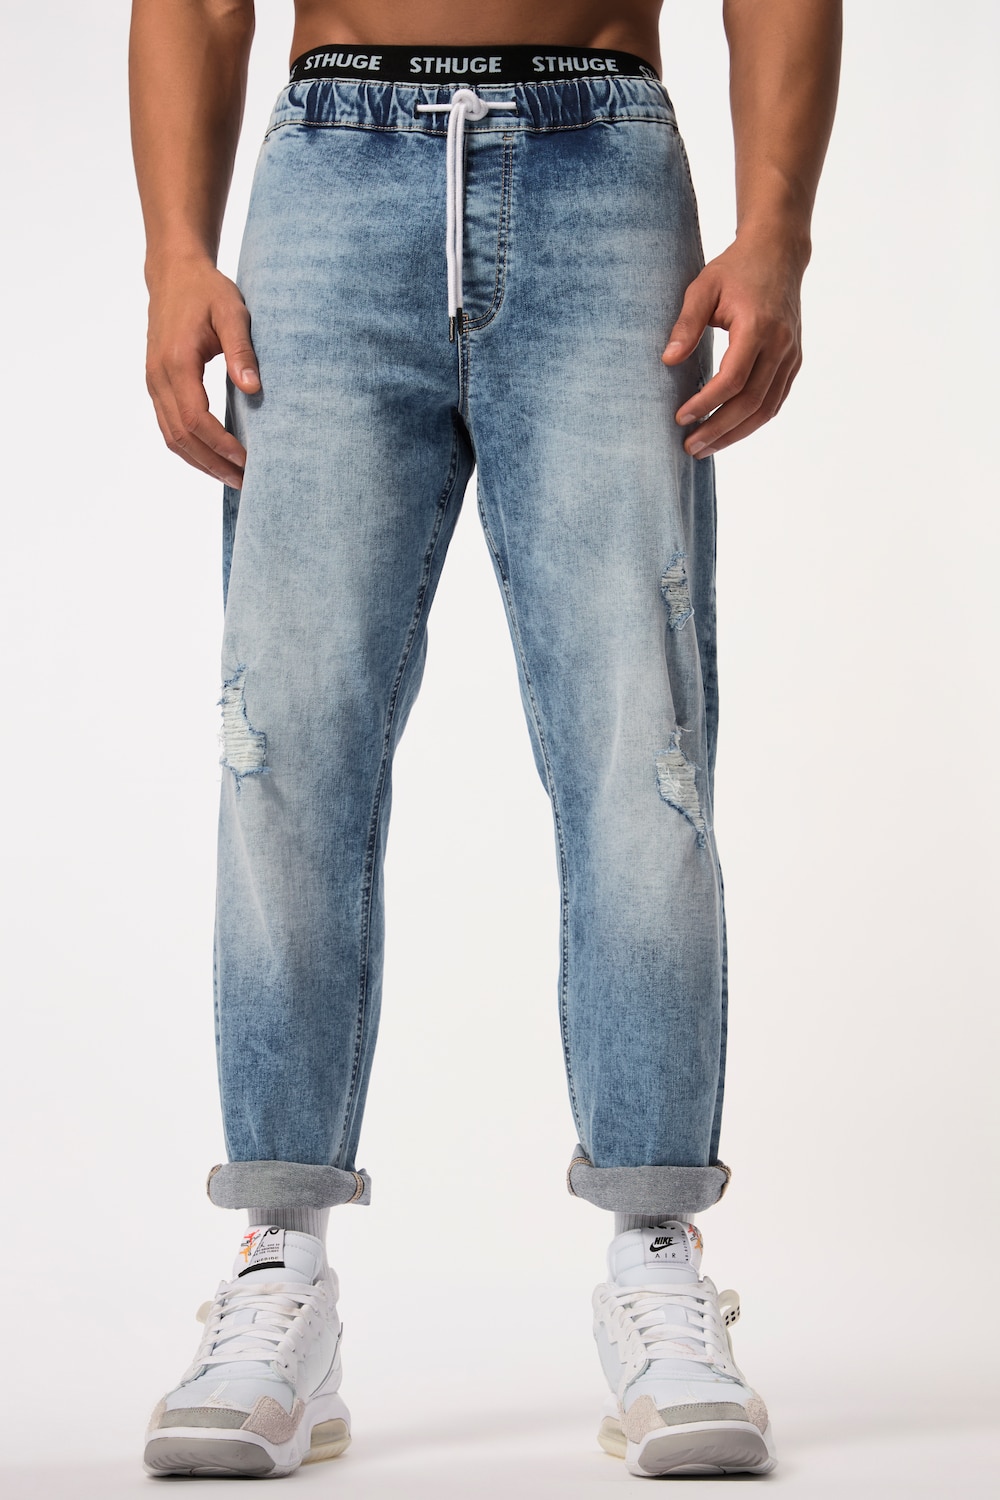 Grote Maten STHUGE jeans FLEXLASTIC®male, blauw, Maat: L, Katoen, STHUGE